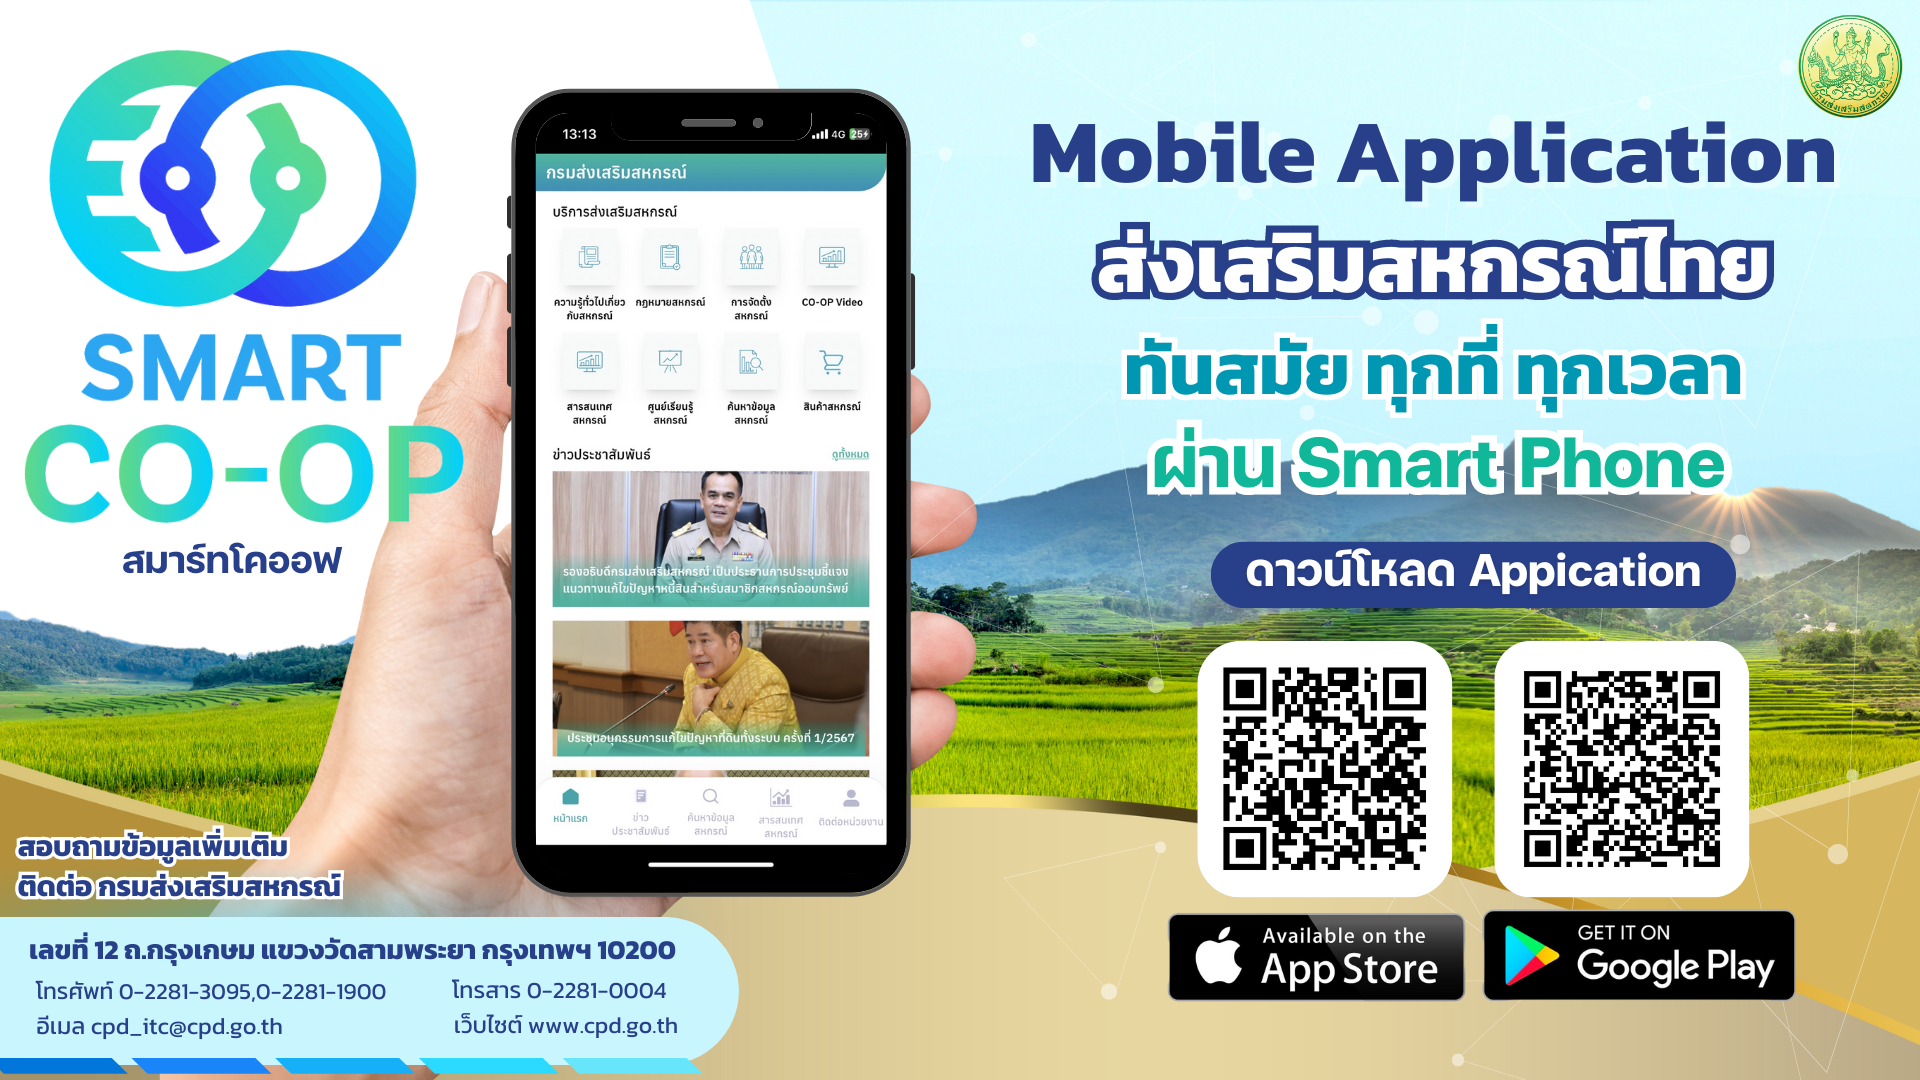 Smart Coop  ส่งเสริมสหกรณ์ไทย ทันสมัย ทุกที่ ทุกเวลา ผ่าน Smart Phone